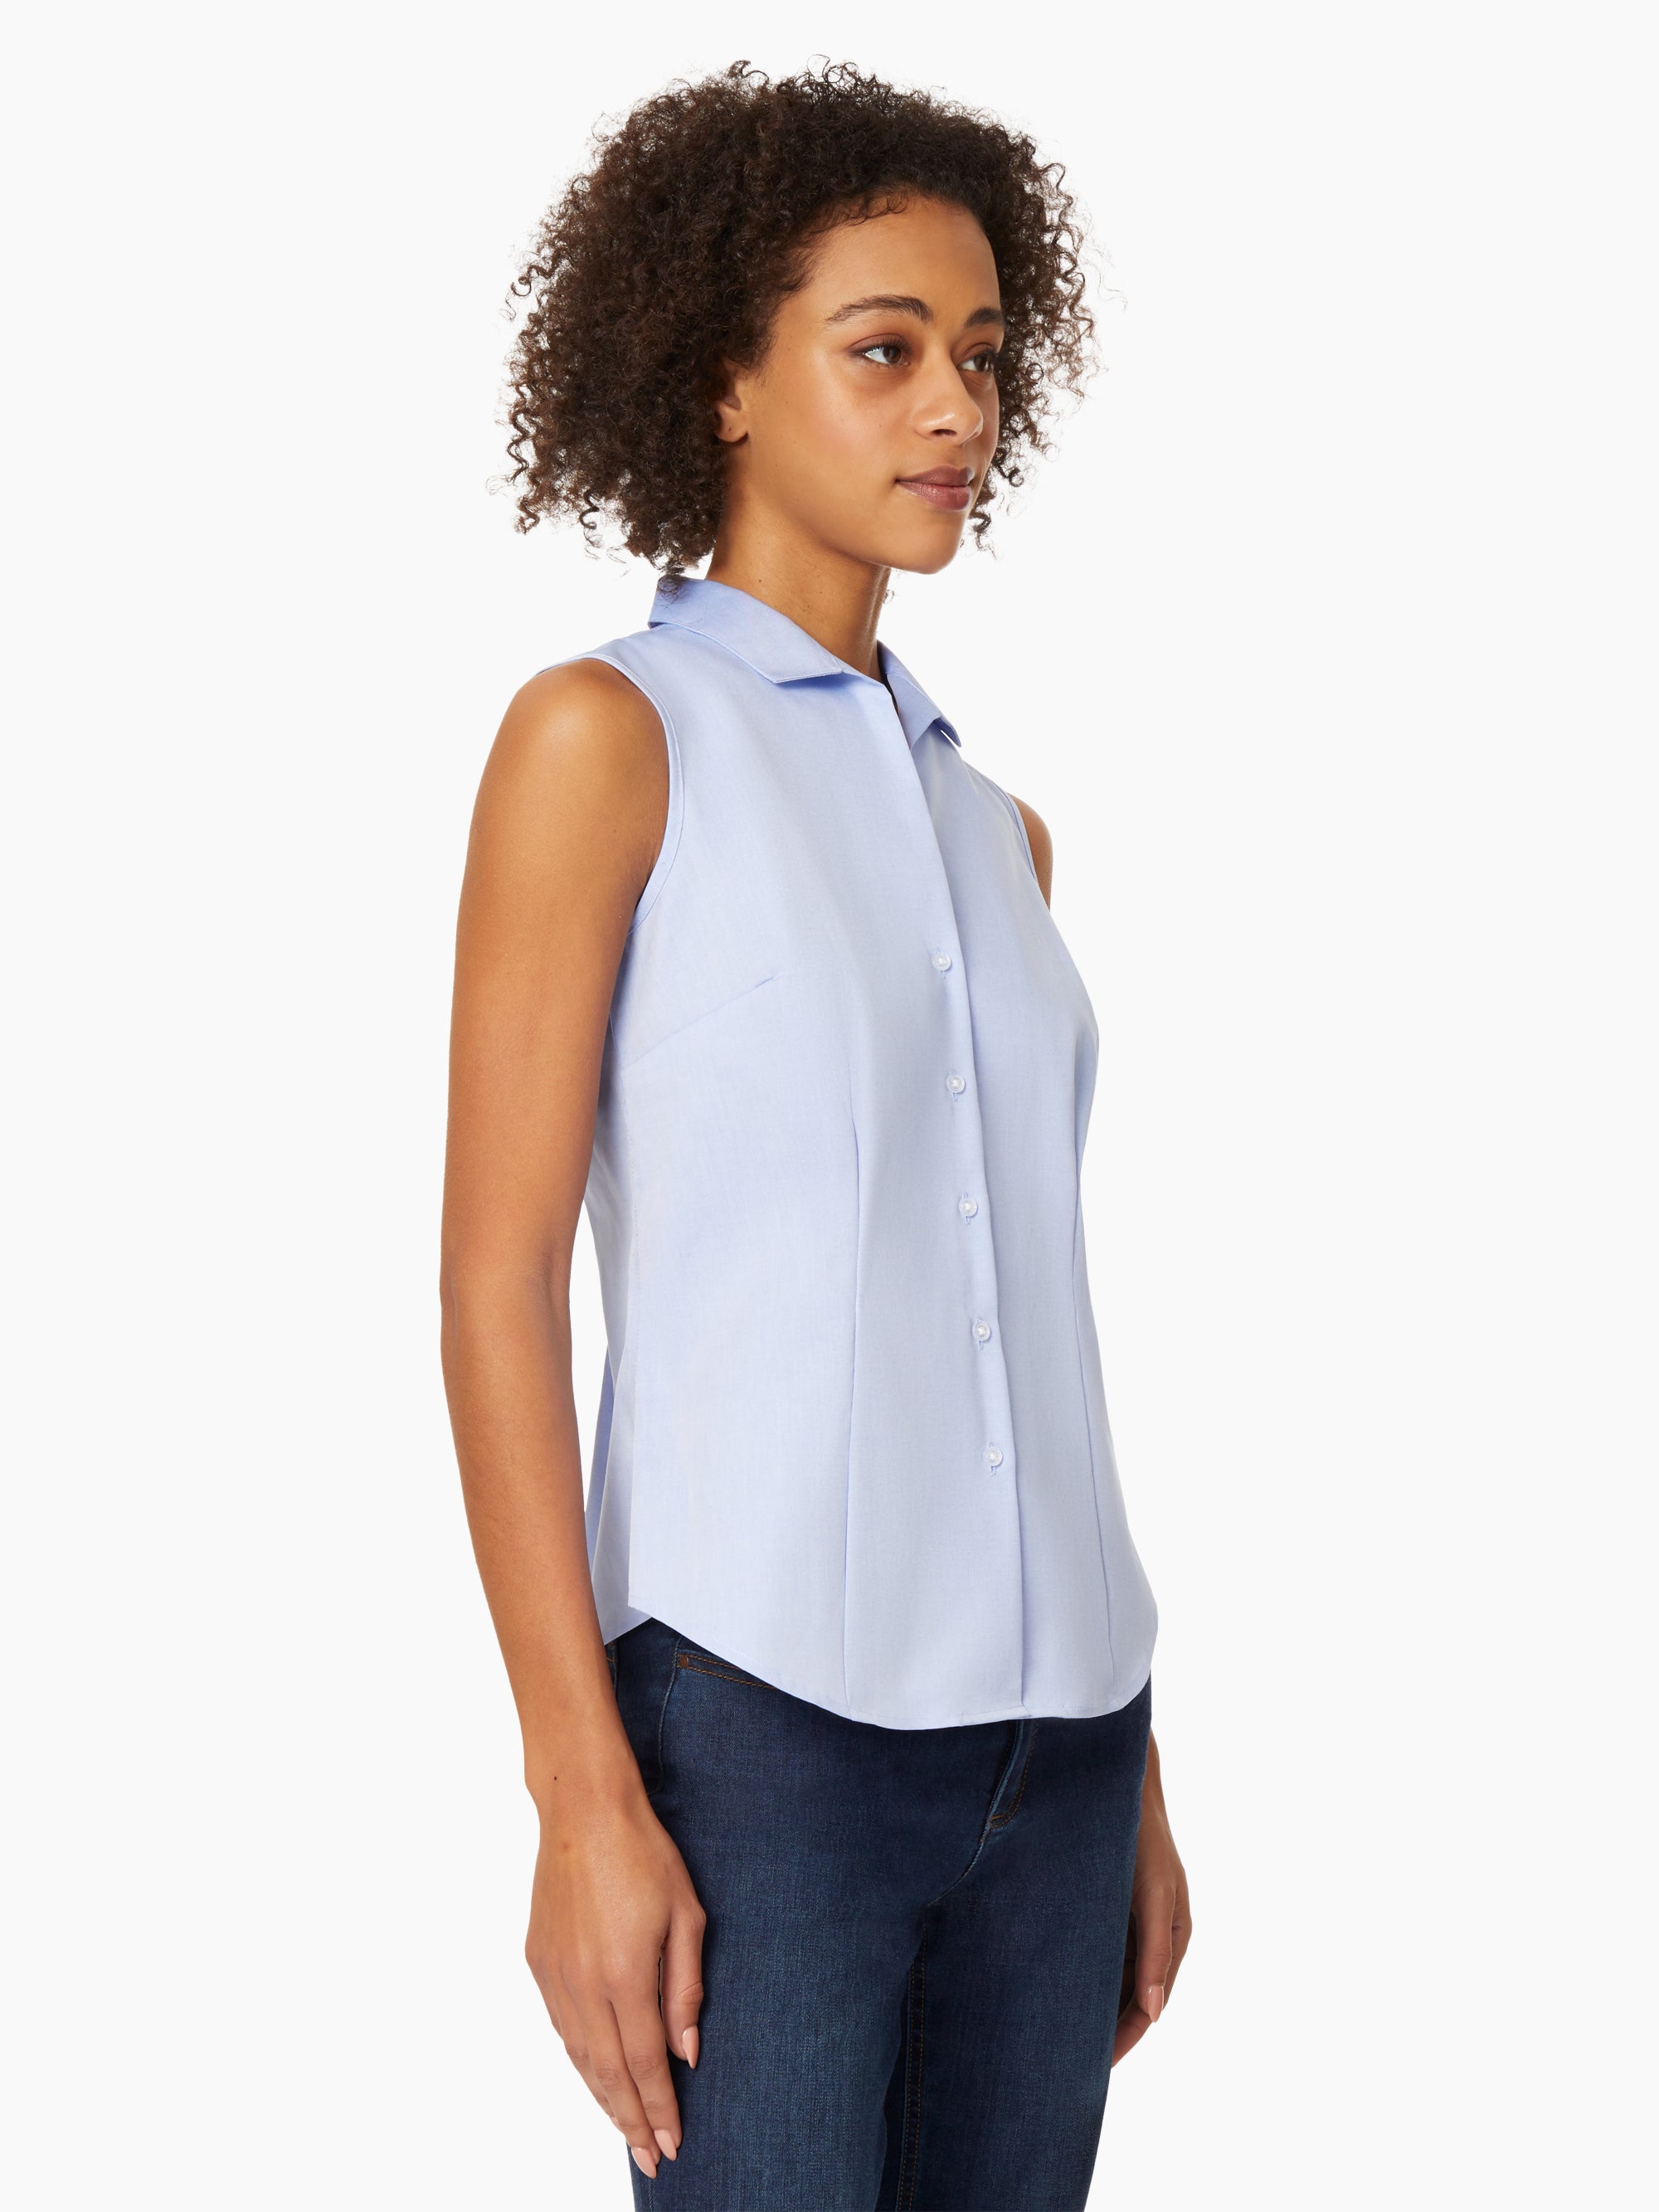 Women's Wrinkle-Free Sleeveless Shirt - Solid